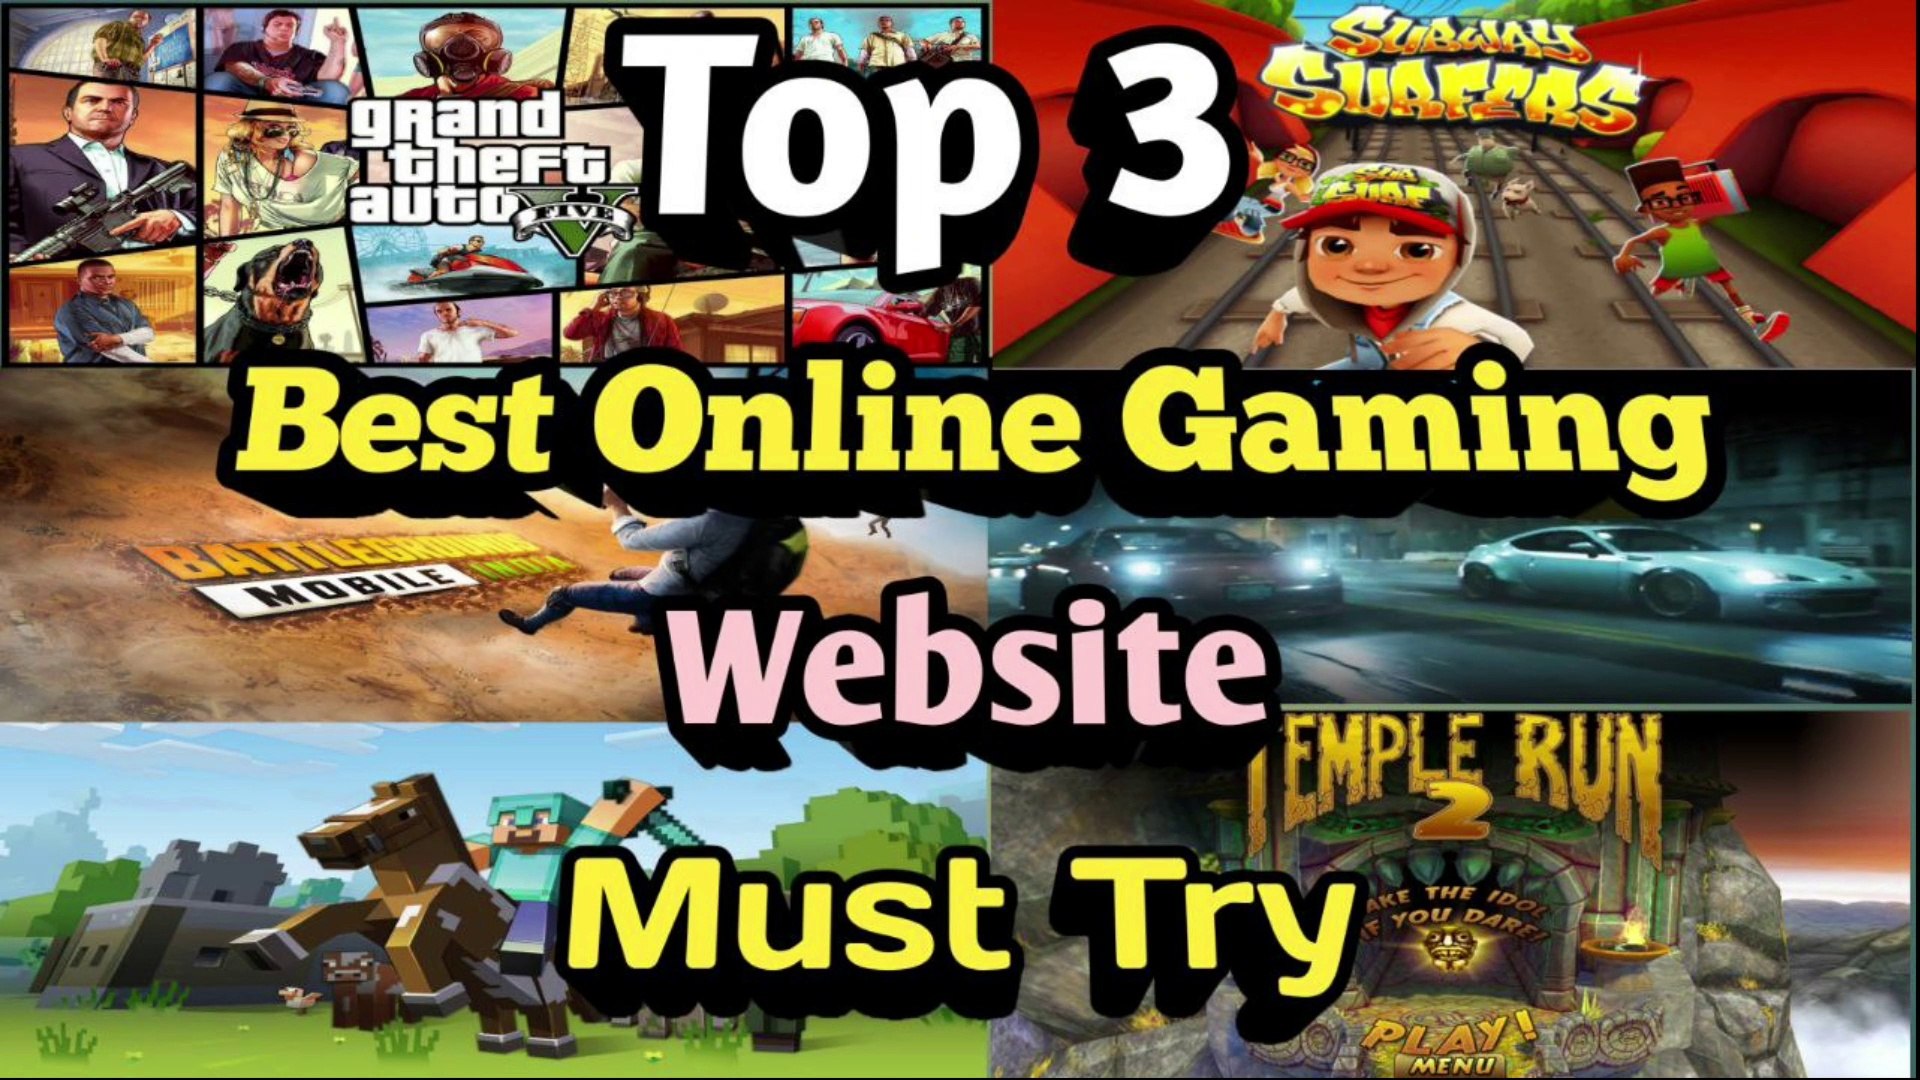 The Best Online Game Websites